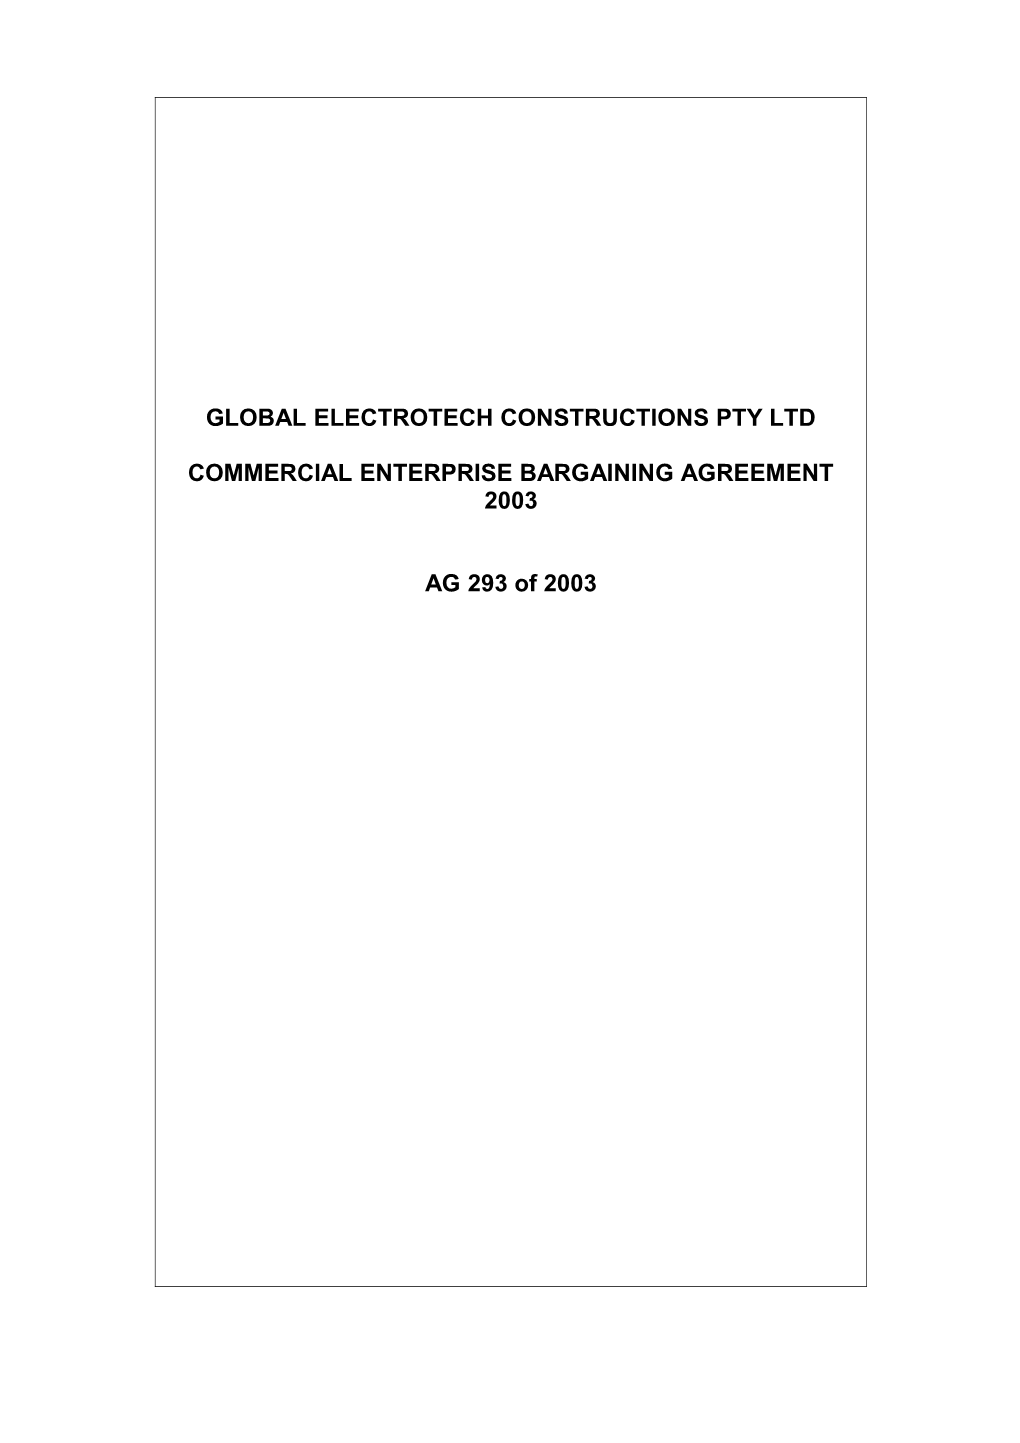 Global Electrotech Constructions Pty Ltd Commercial Enterprise Bargaining Agreement 2003